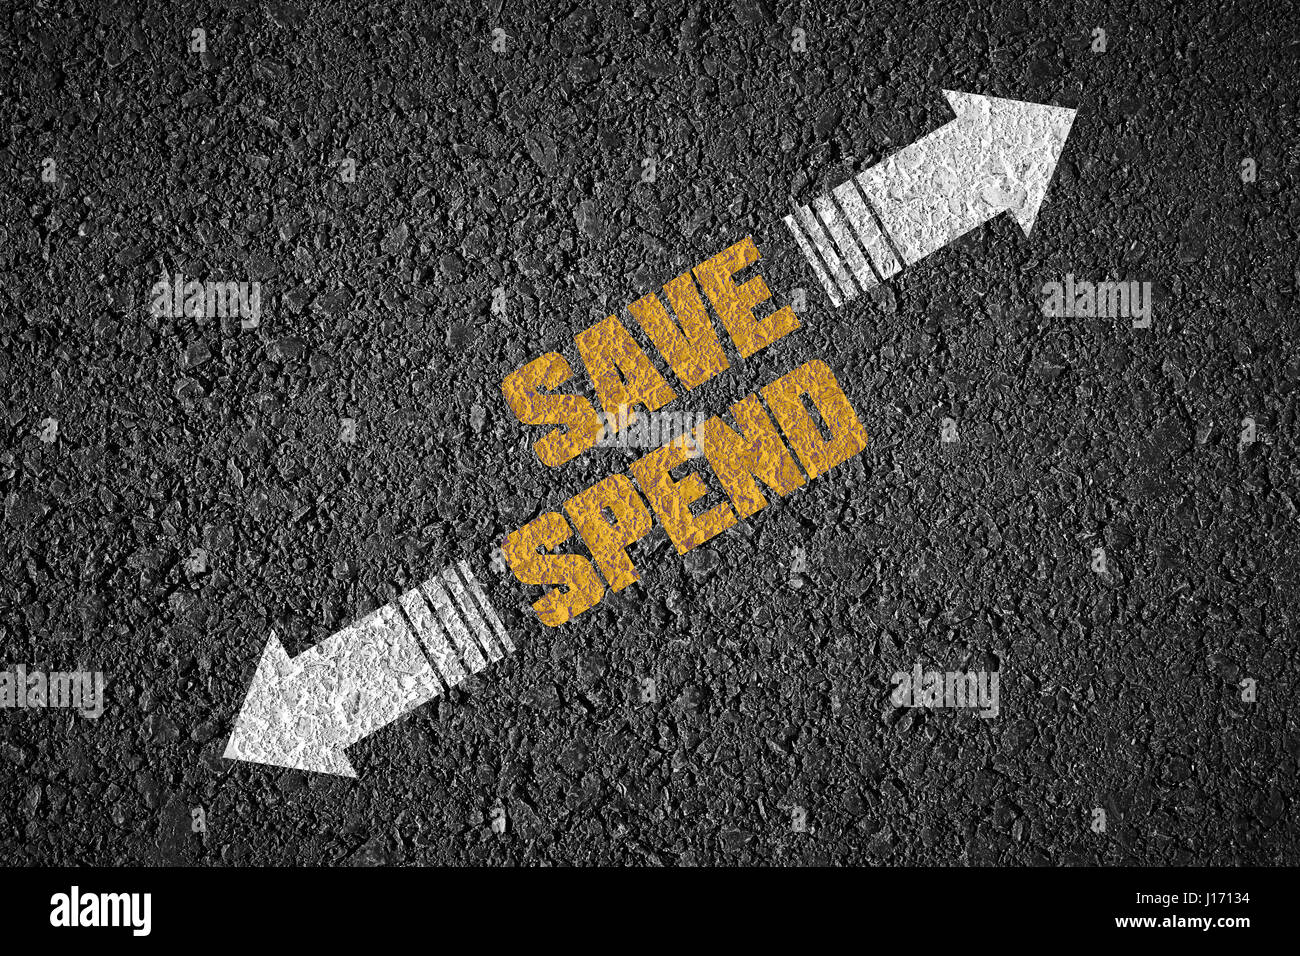 Save spend arrow Stock Photo